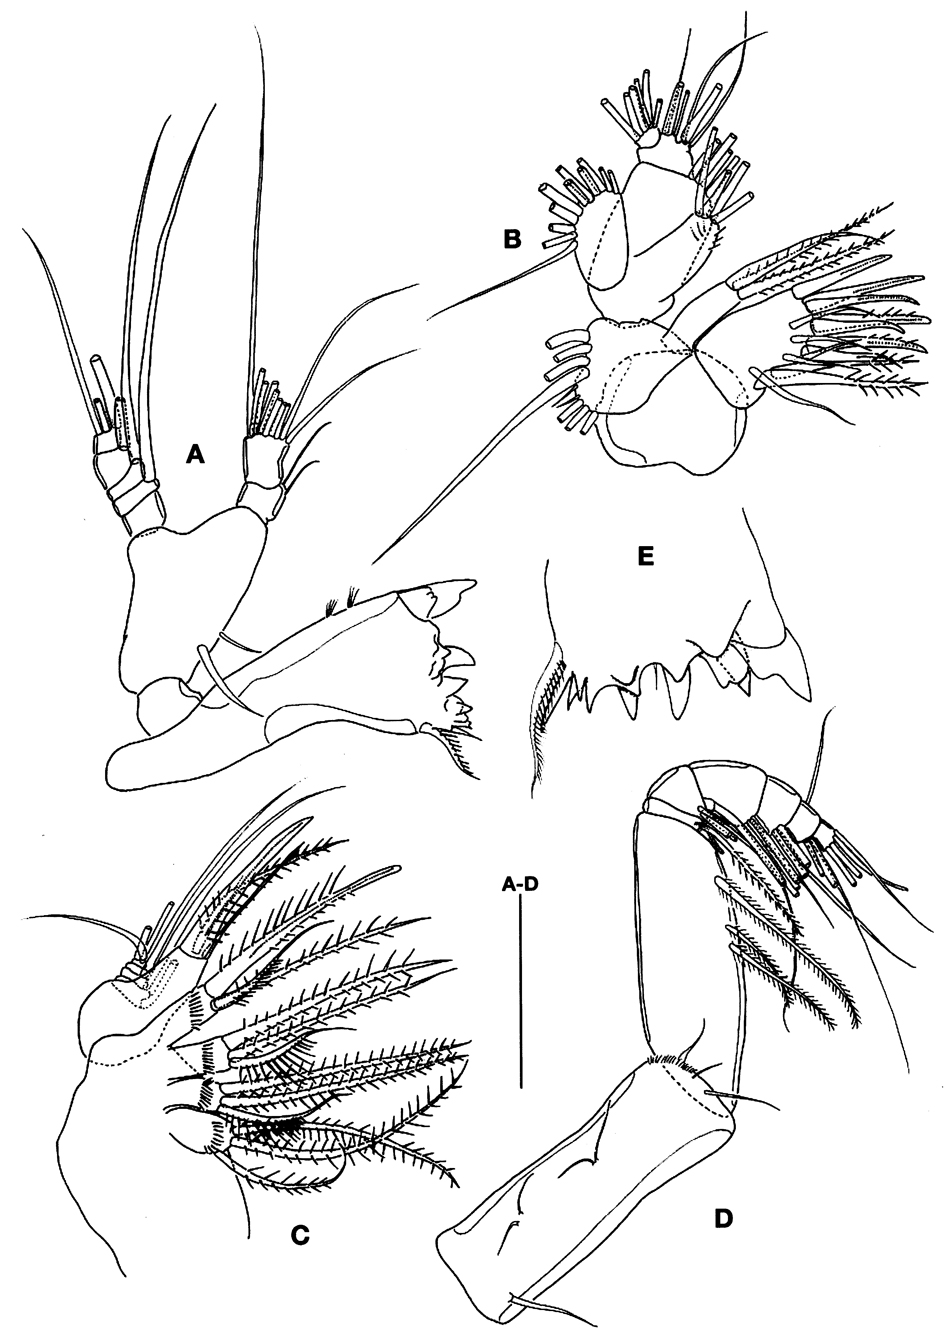 Species Aetideus acutus - Plate 12 of morphological figures